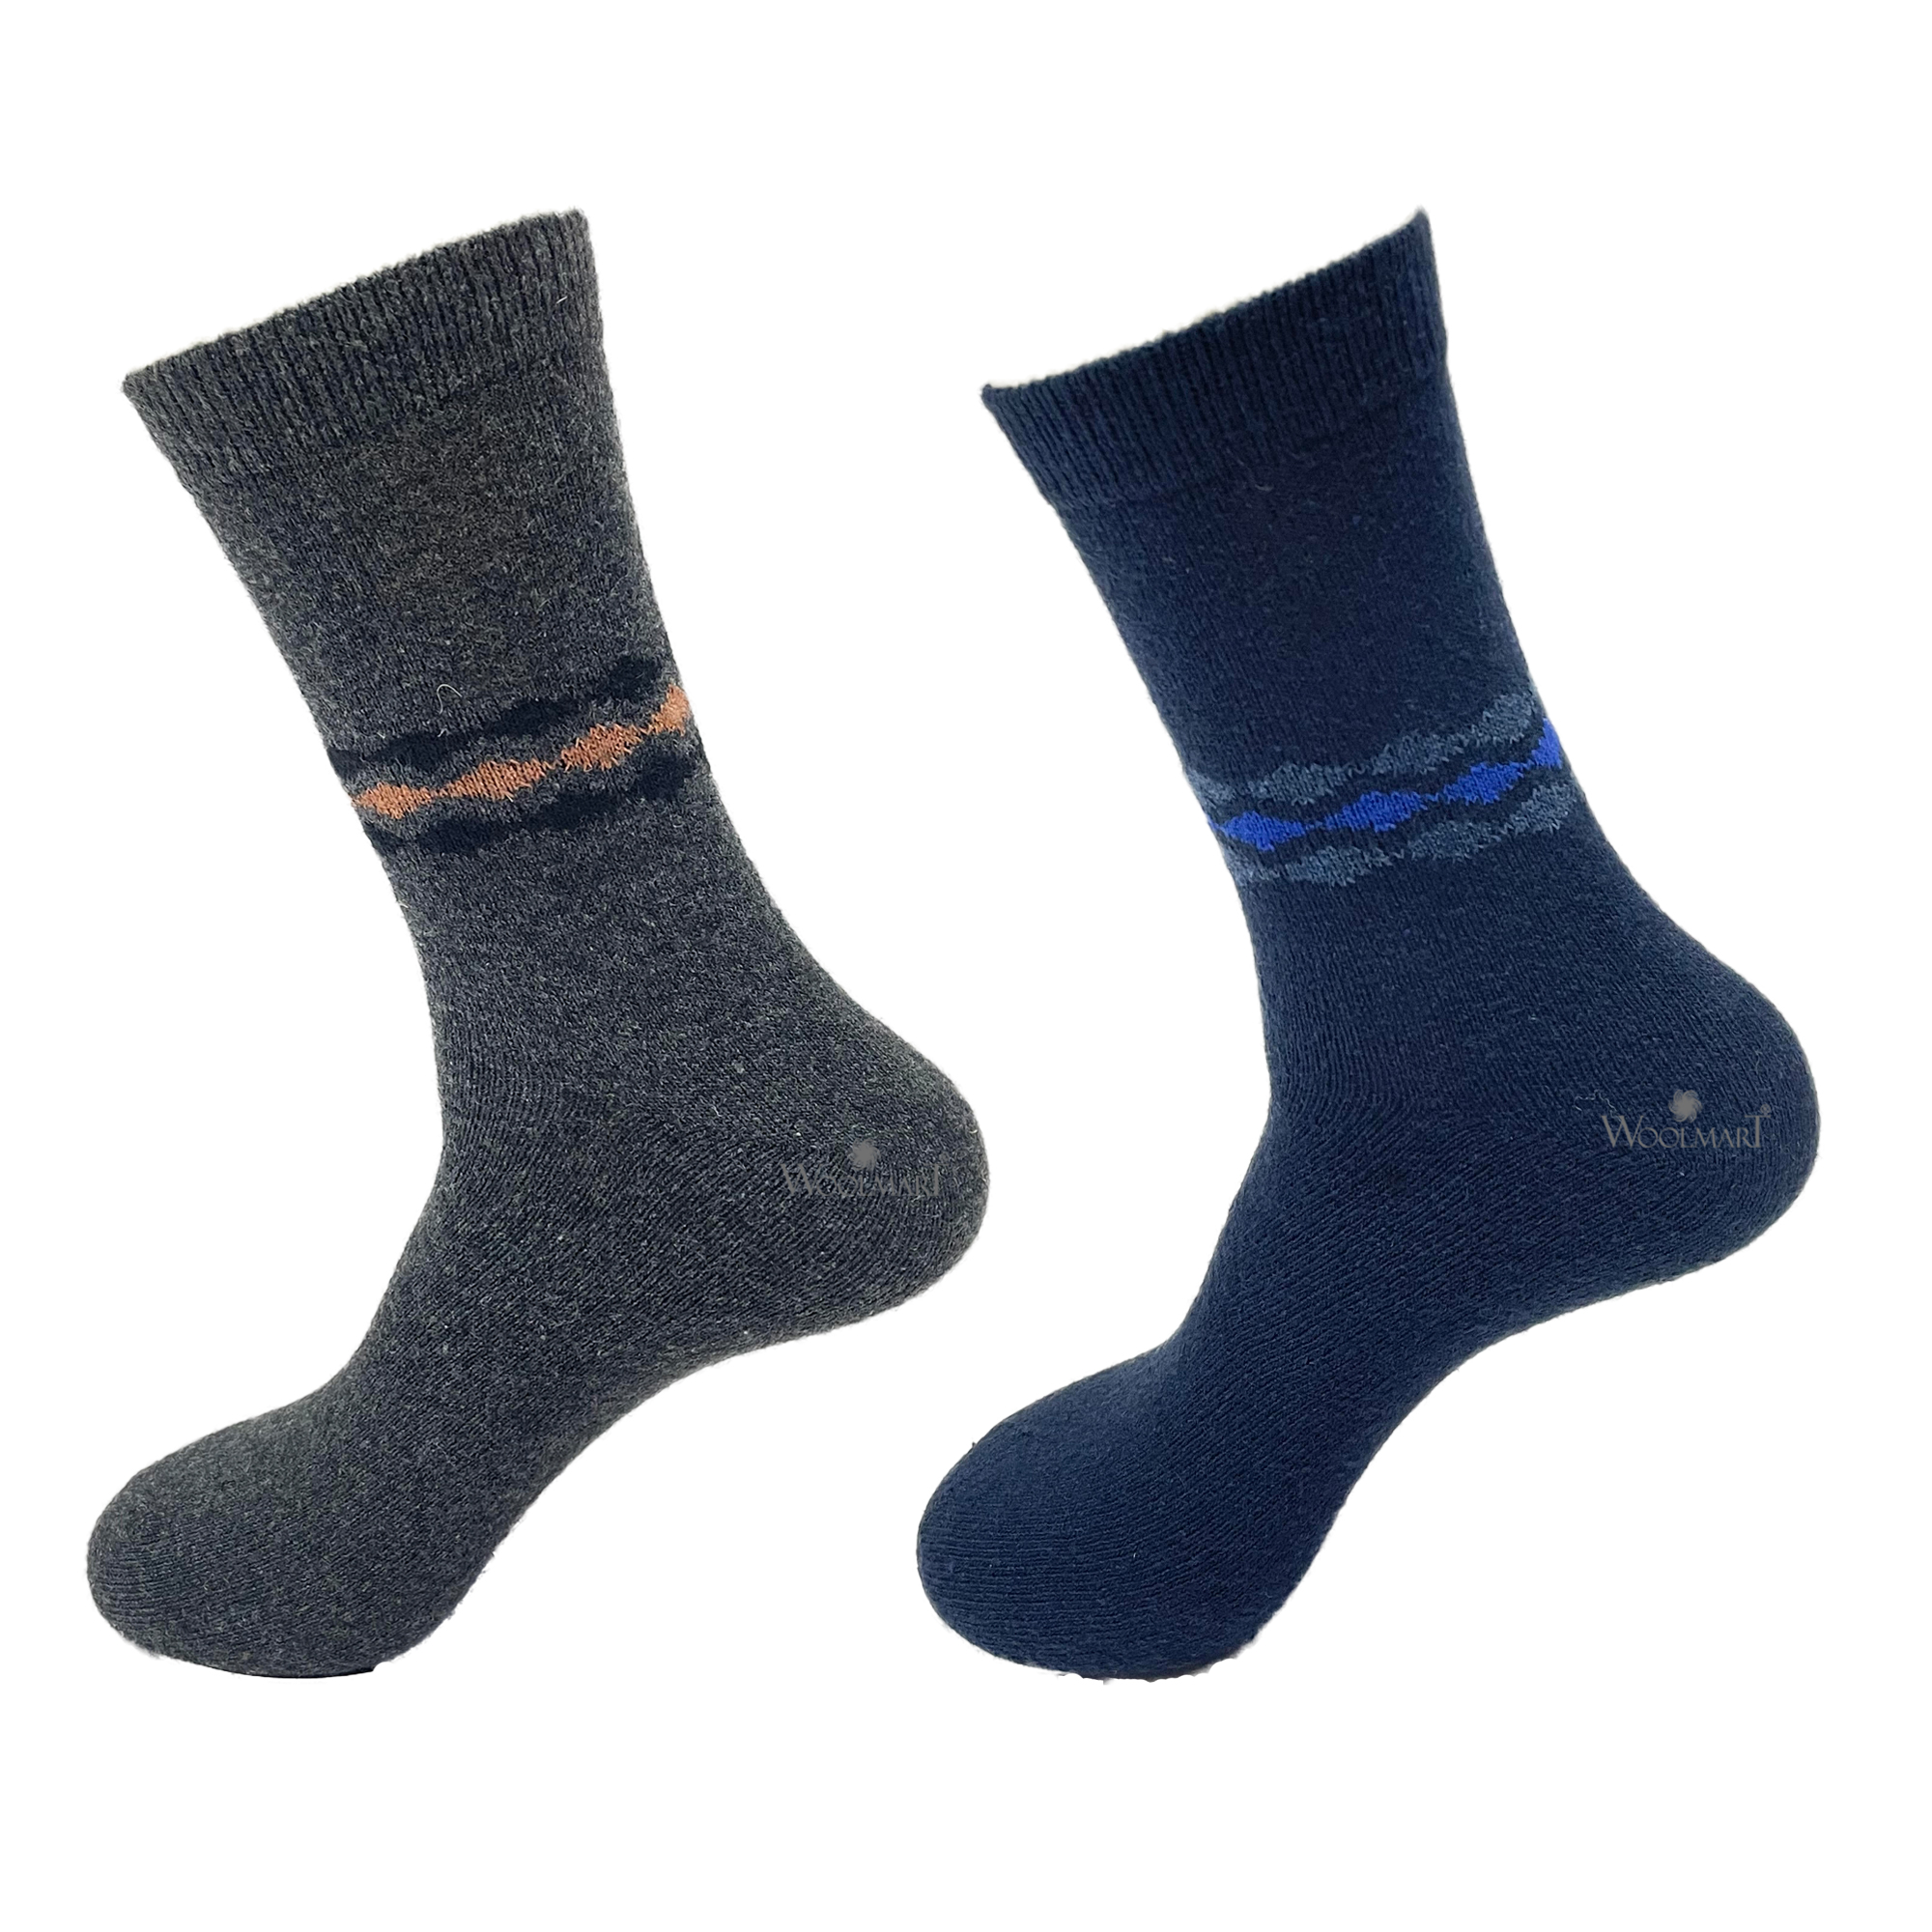 Warm Socks (Pack of 2) Grey & Navy